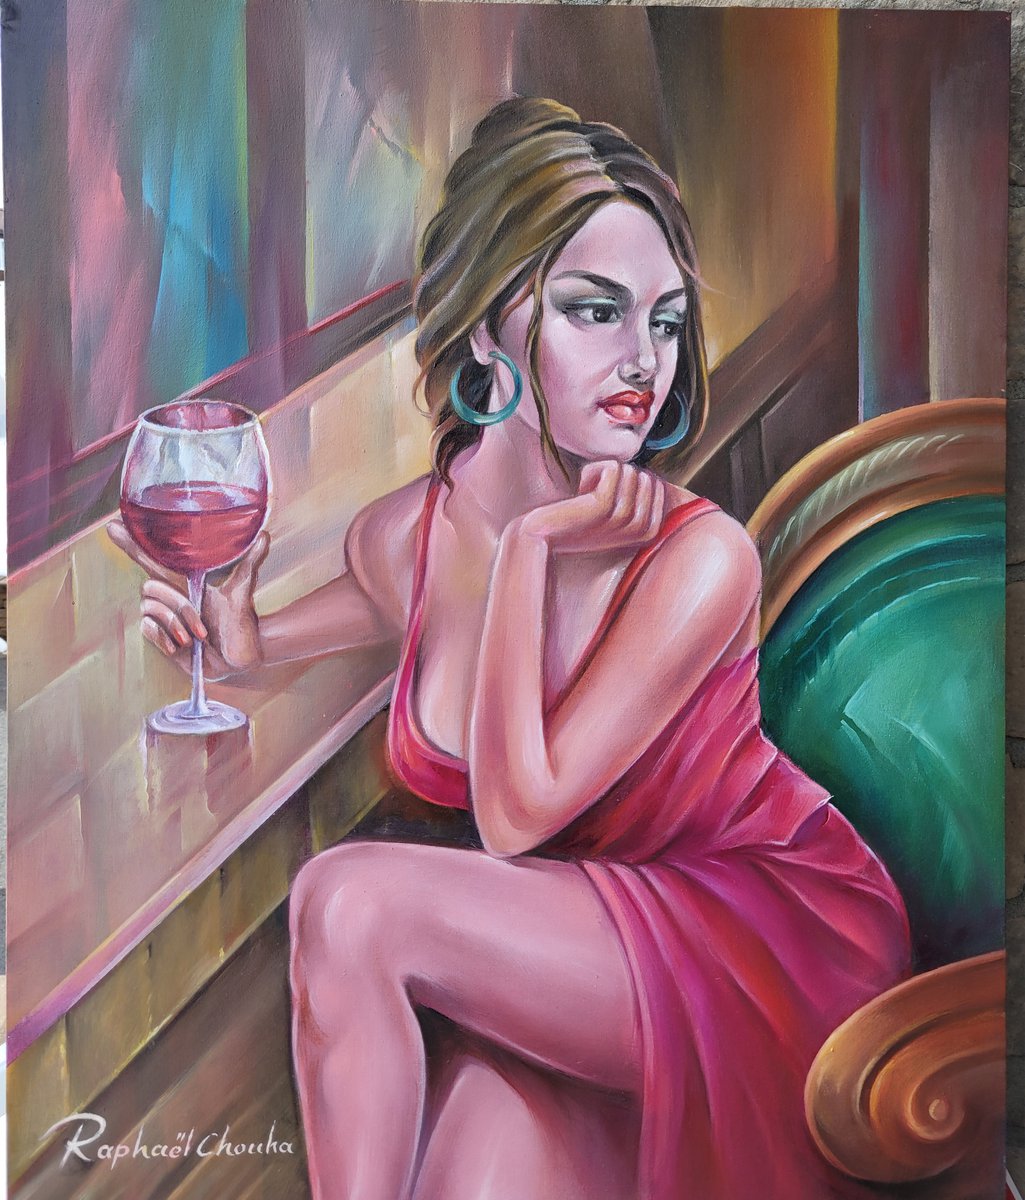 The drunk lady by Raphael Chouha